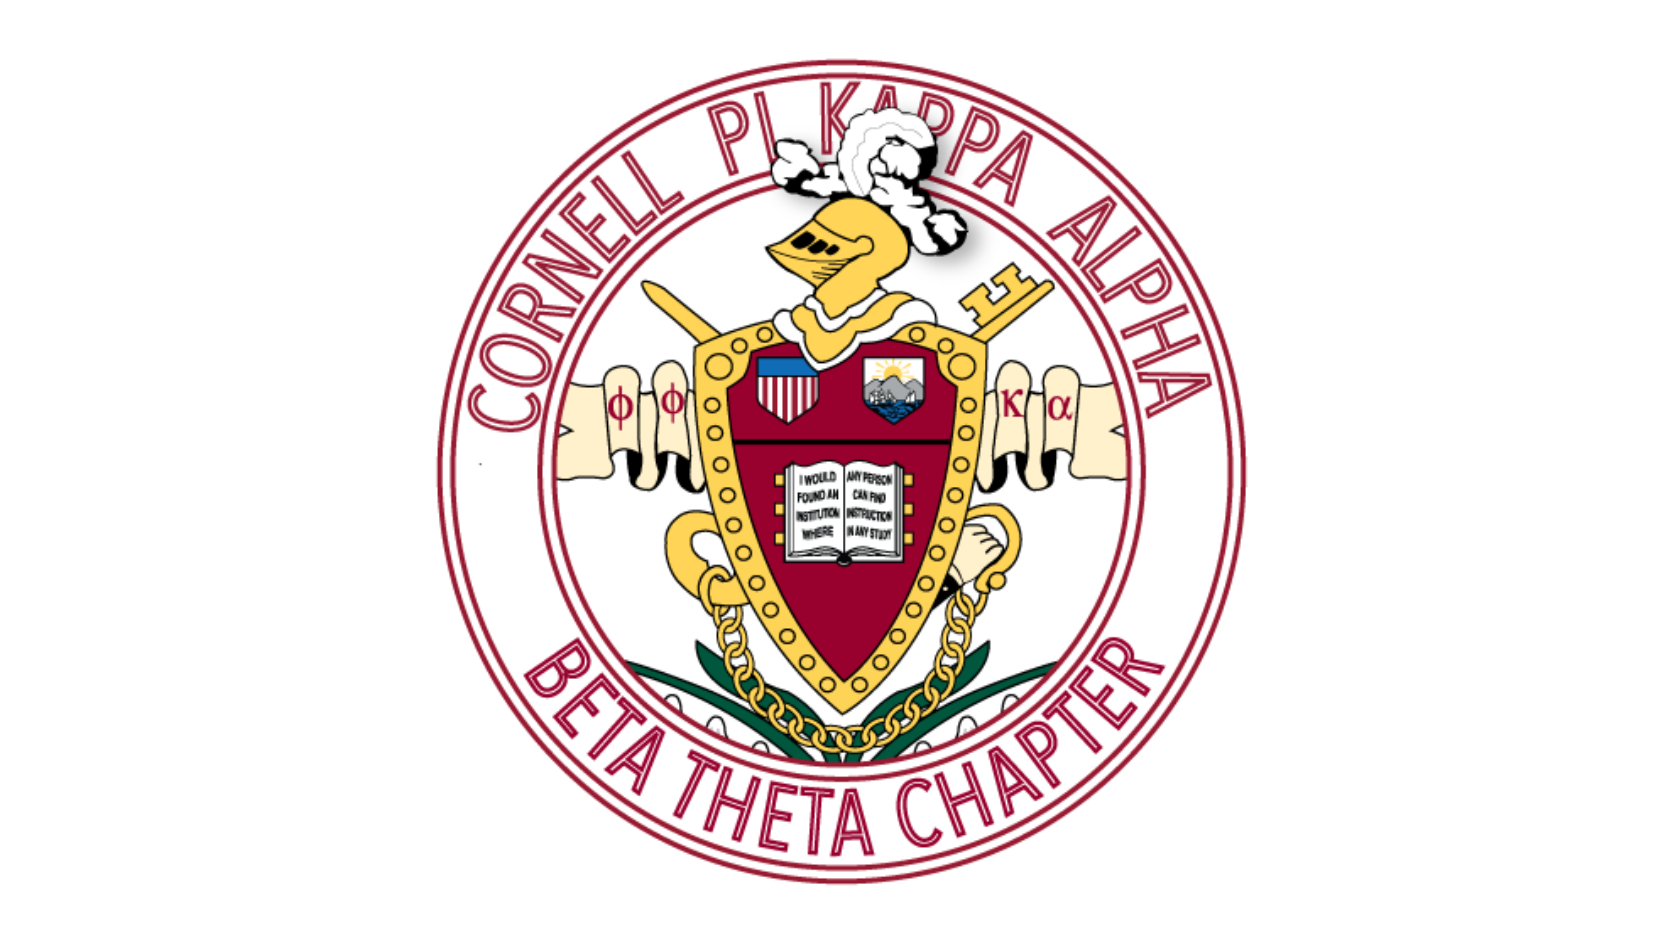 Pi Kappa Alpha at Cornell Logo